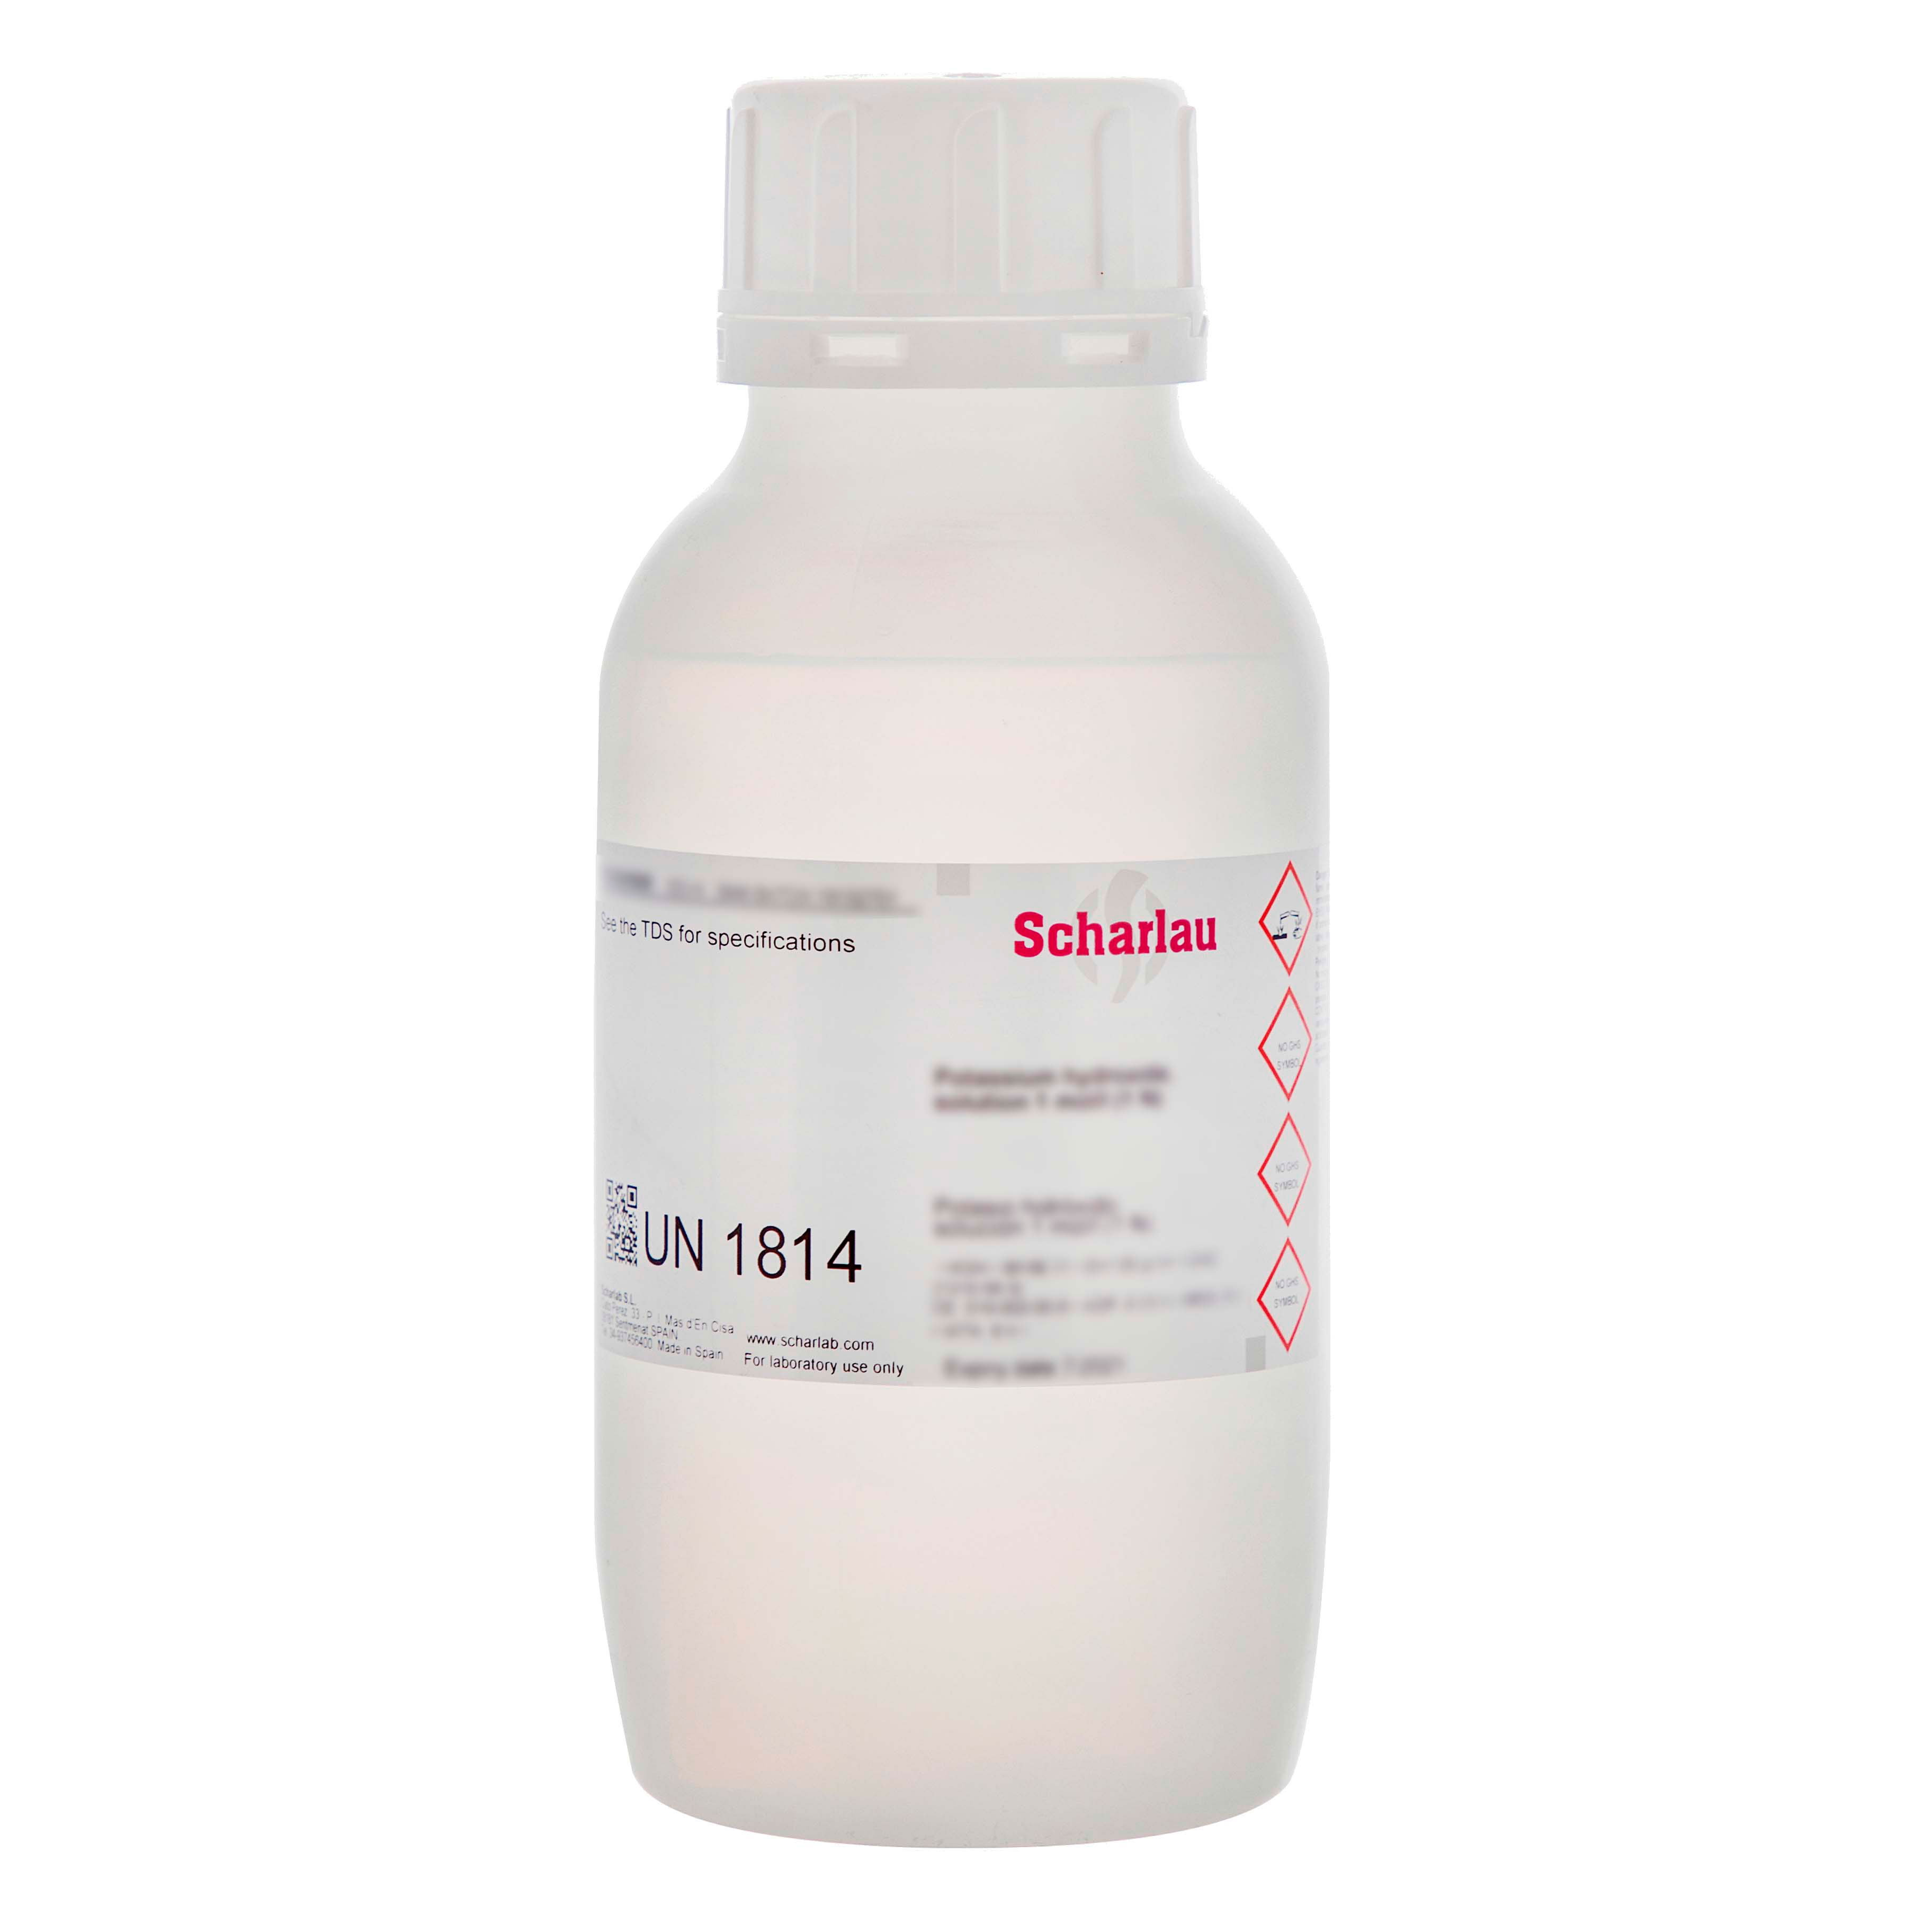 Estaño, solución patrón 1000 mg/l Sn para AAs (estaño(IV) cloruro en ácido clorhídrico 5 mol/l) 